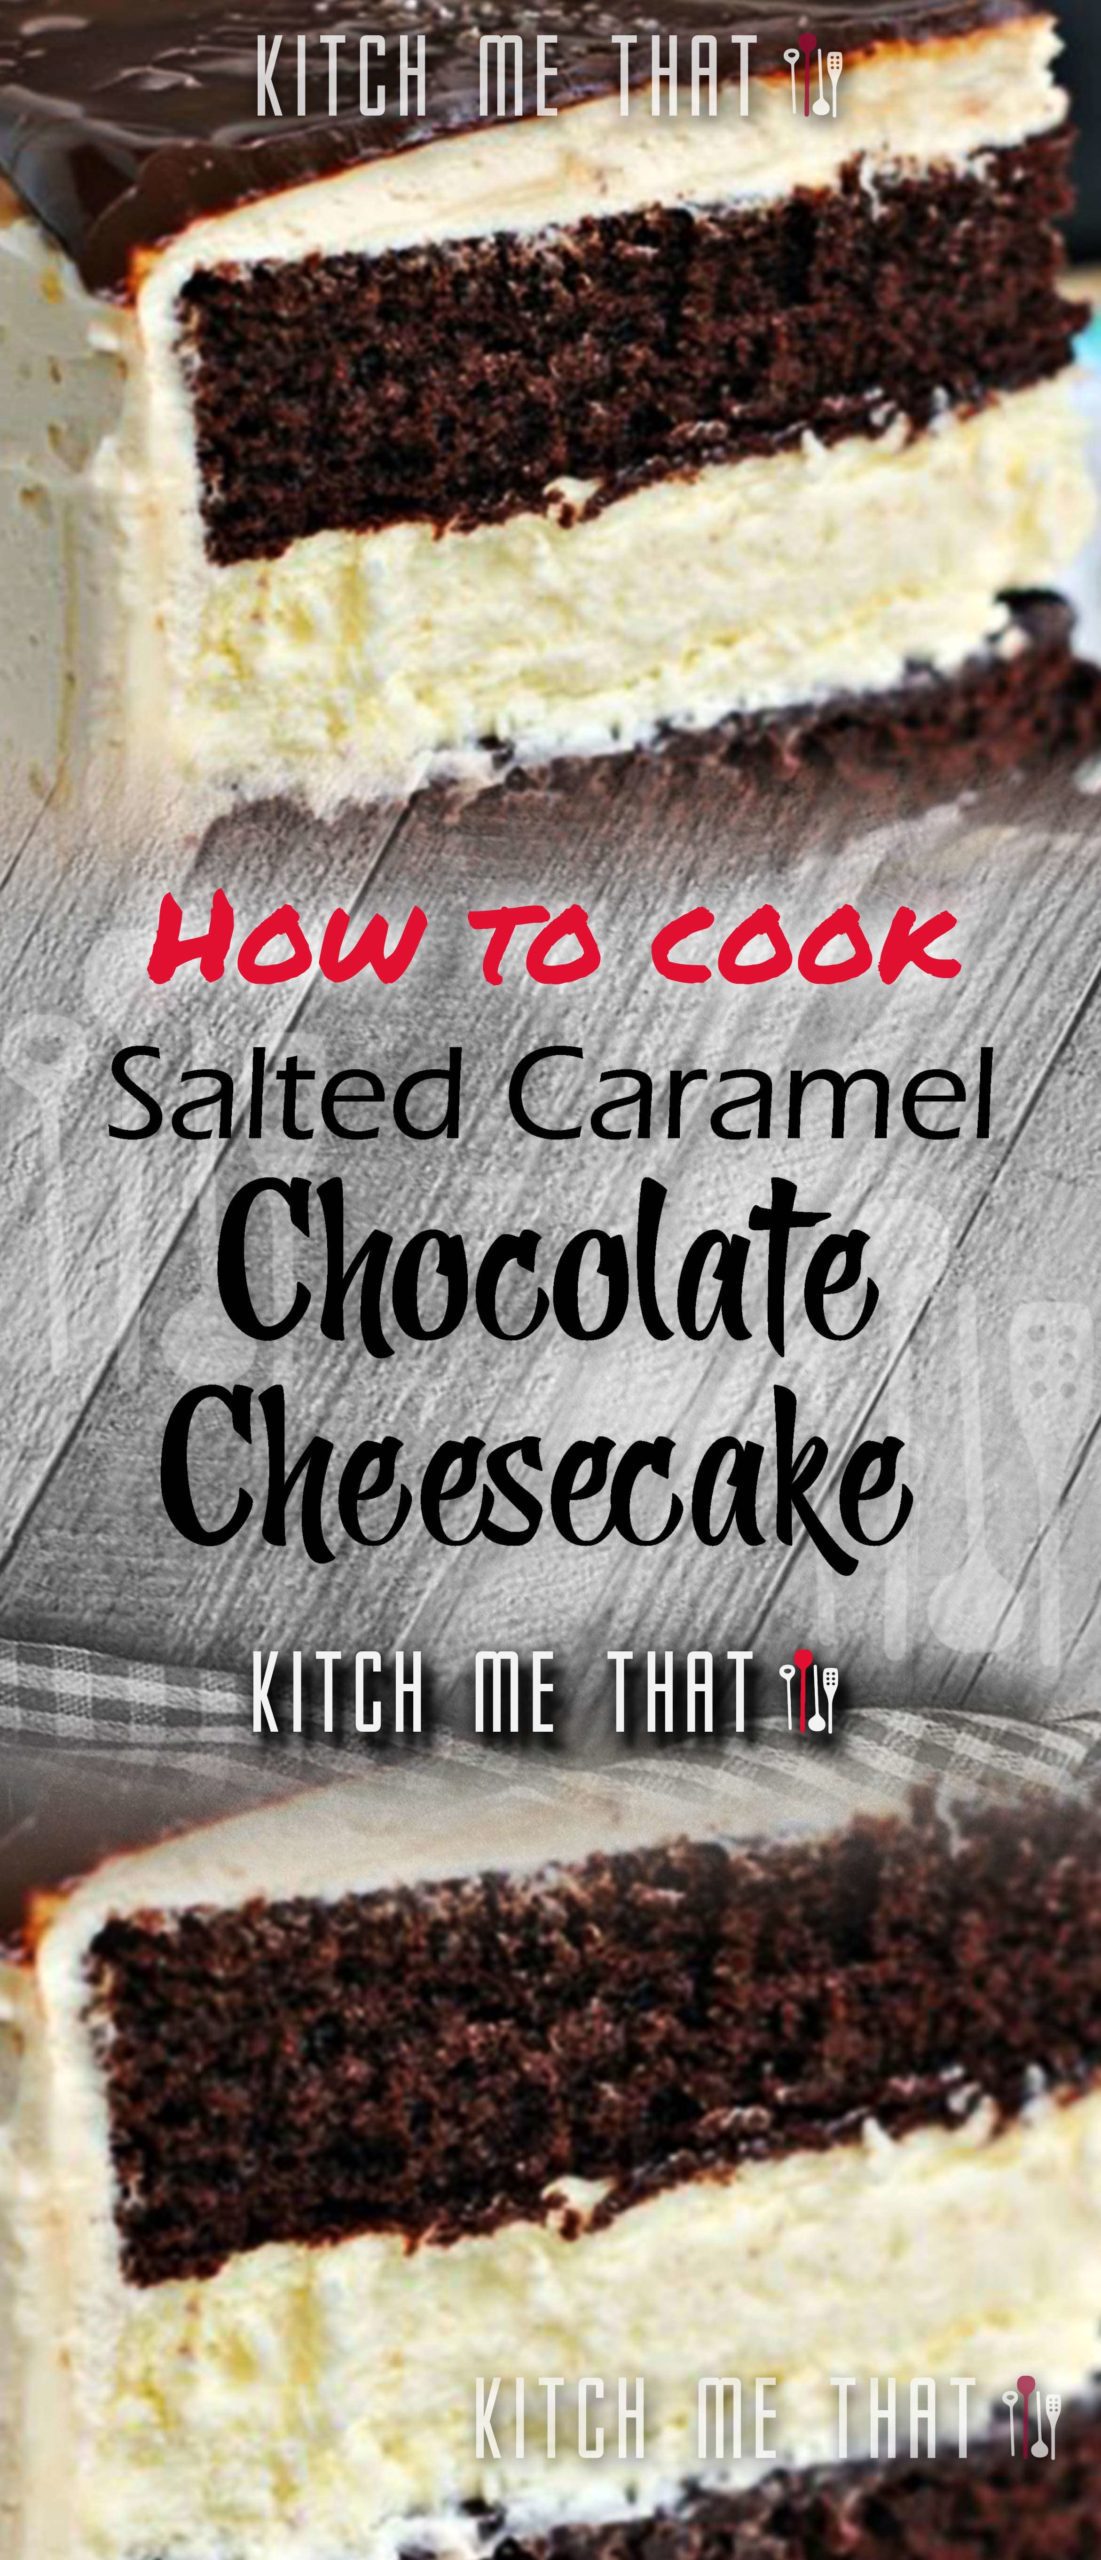 Salted Caramel Chocolate Cheesecake Cake